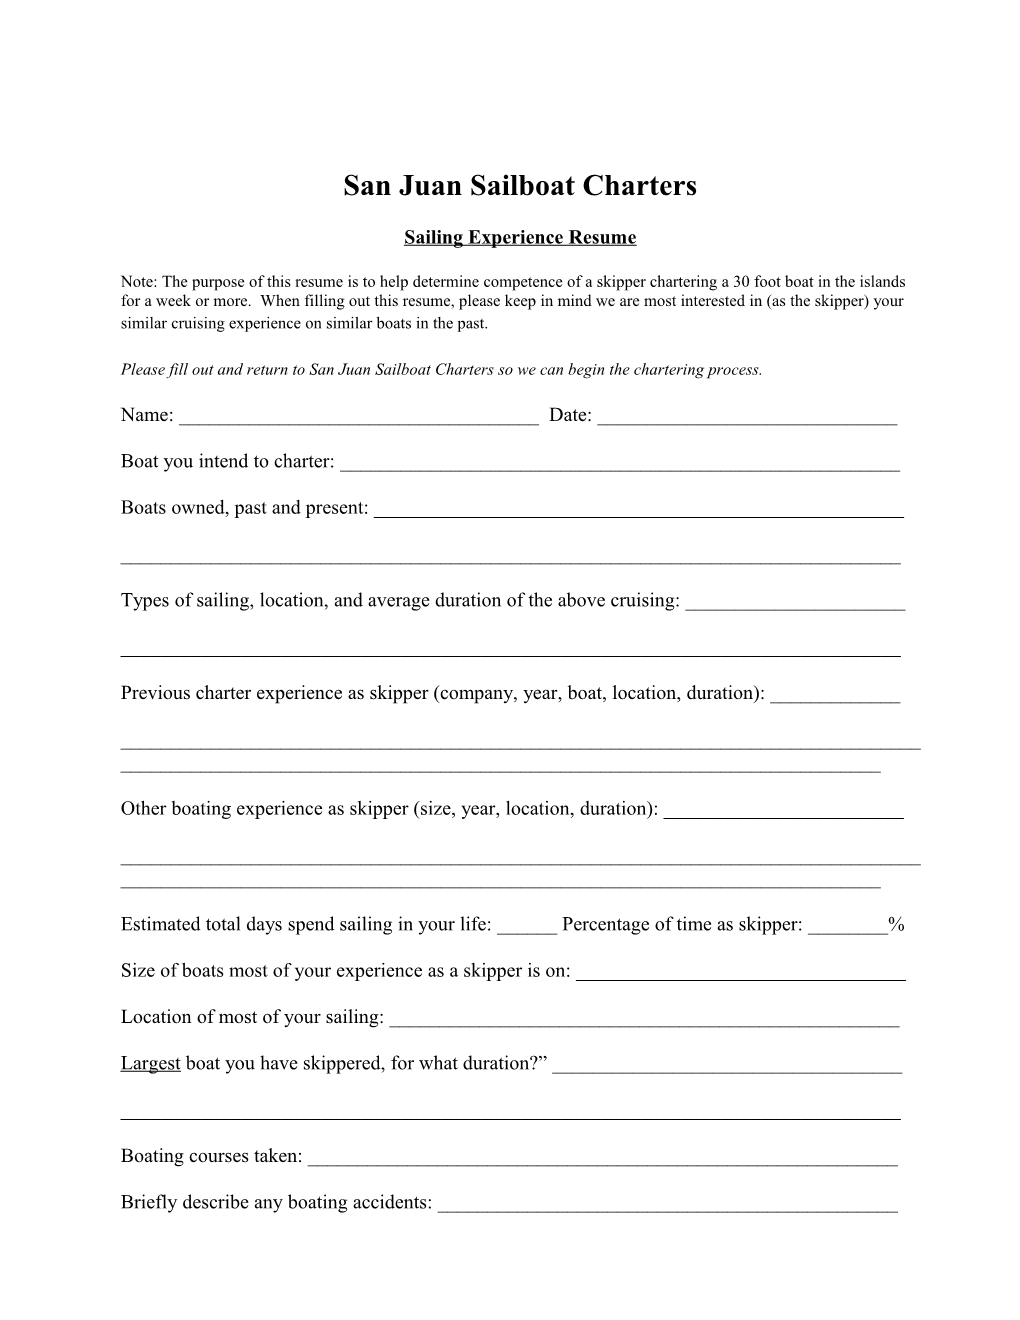 San Juan Sailboat Charters